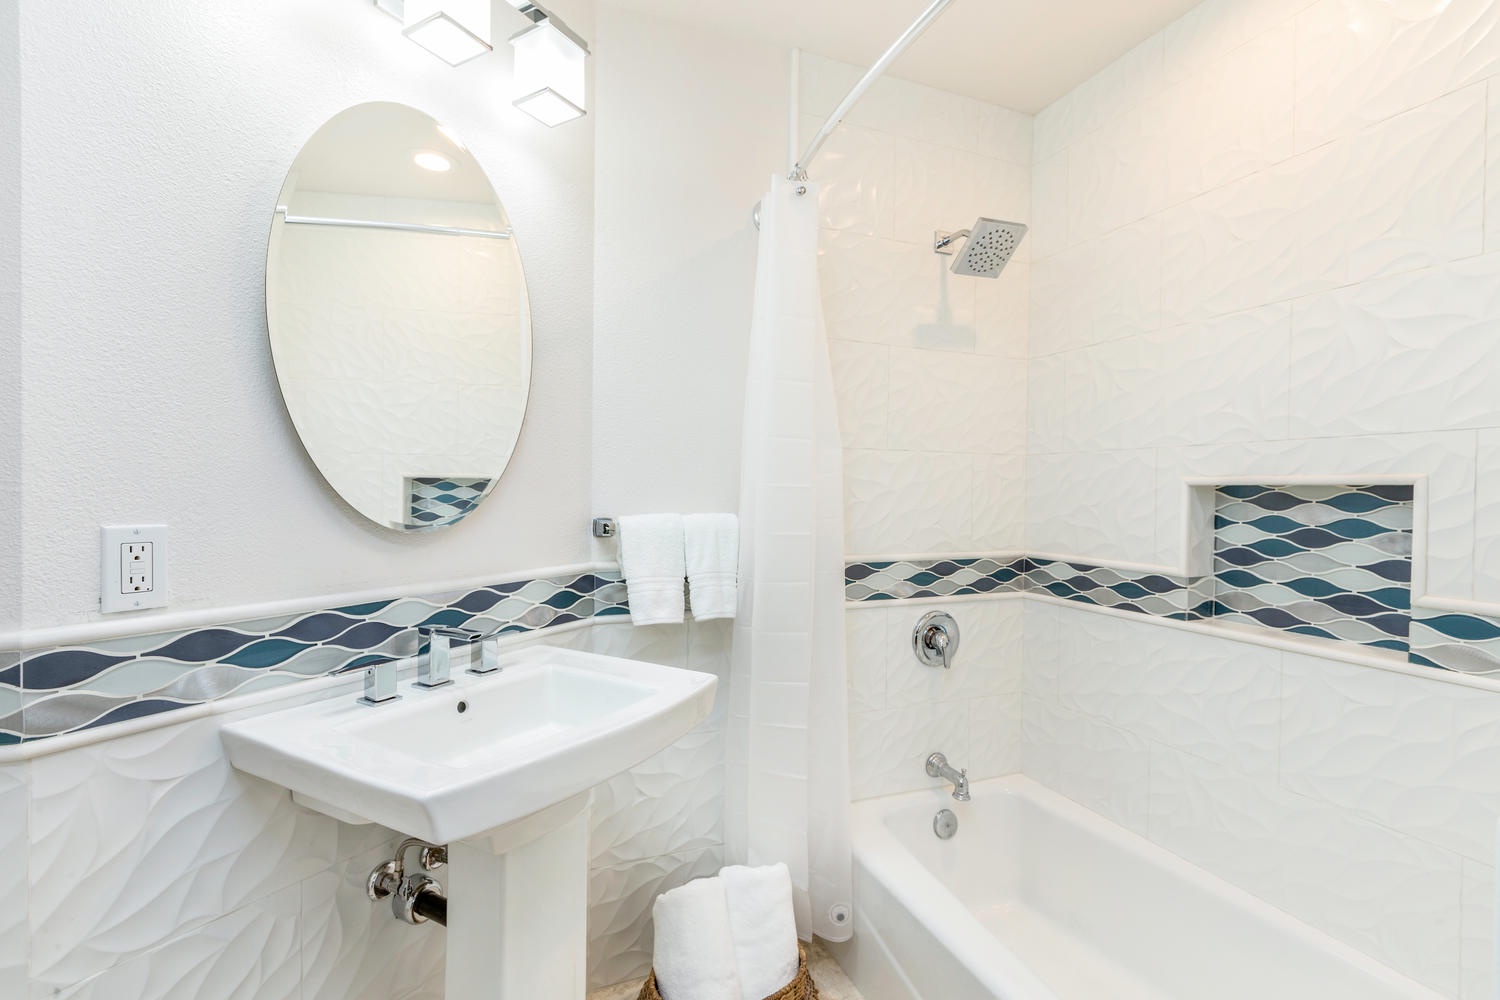 Princeville Vacation Rentals, Half Moon Hana - Third bathroom with designer details.